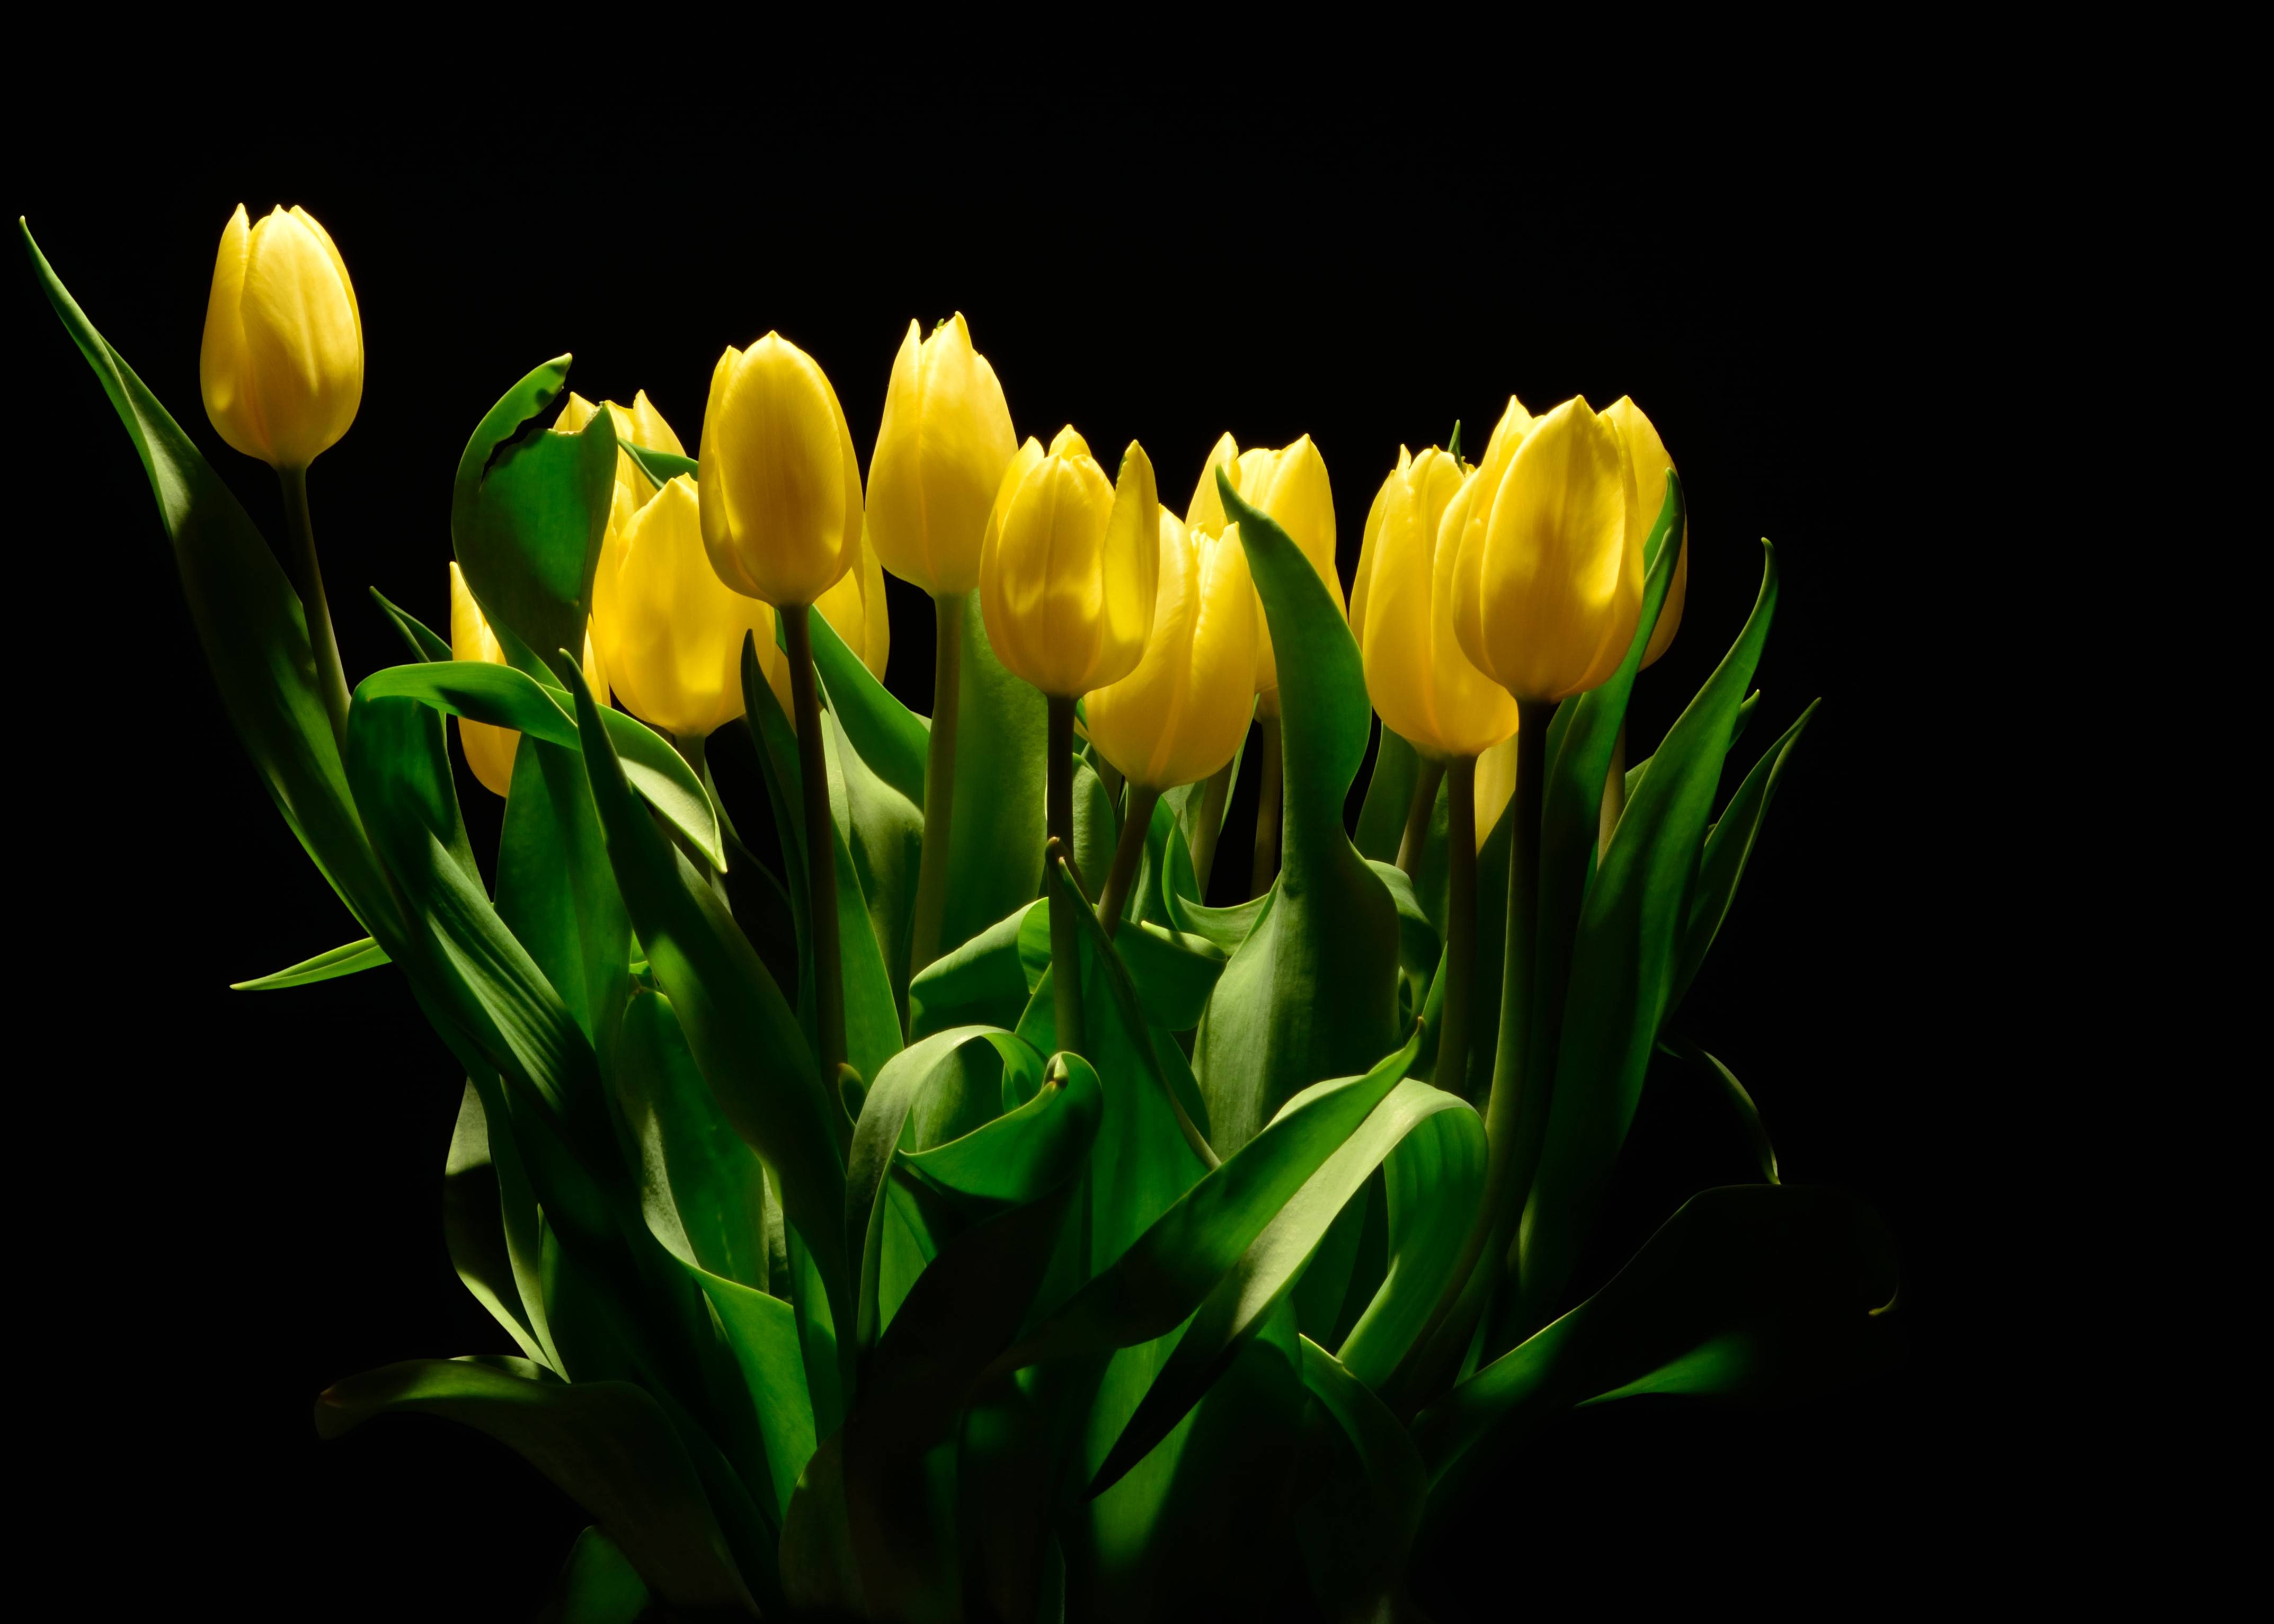 Фото желтые бутоны тюльпаны жёлтые тюльпаны - бесплатные картинки на Fonwall